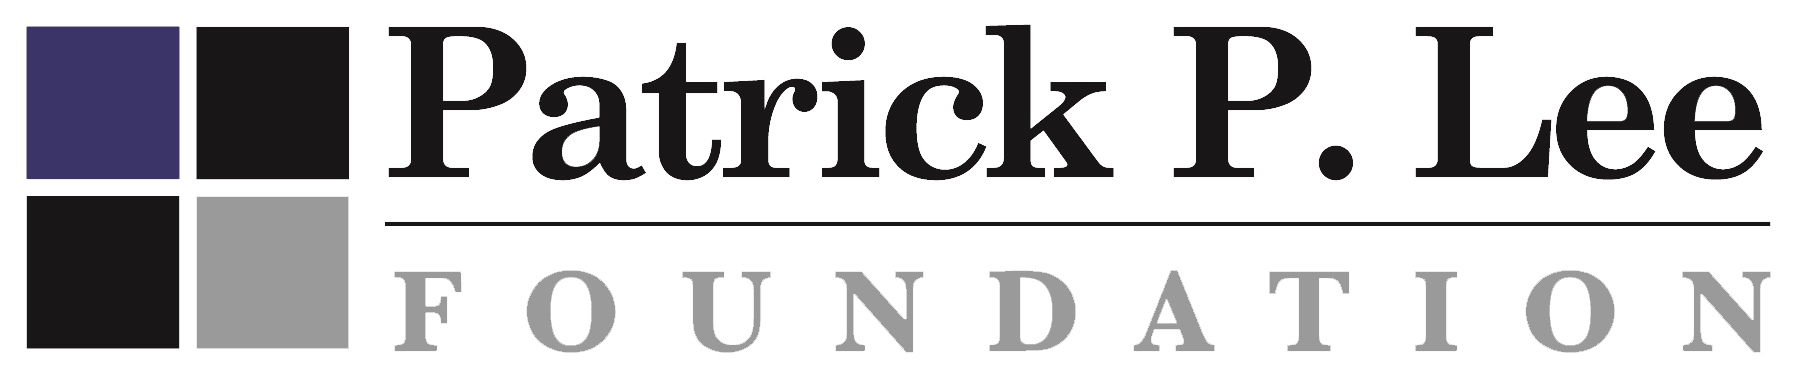 Patrick P. Lee Foundation Logo